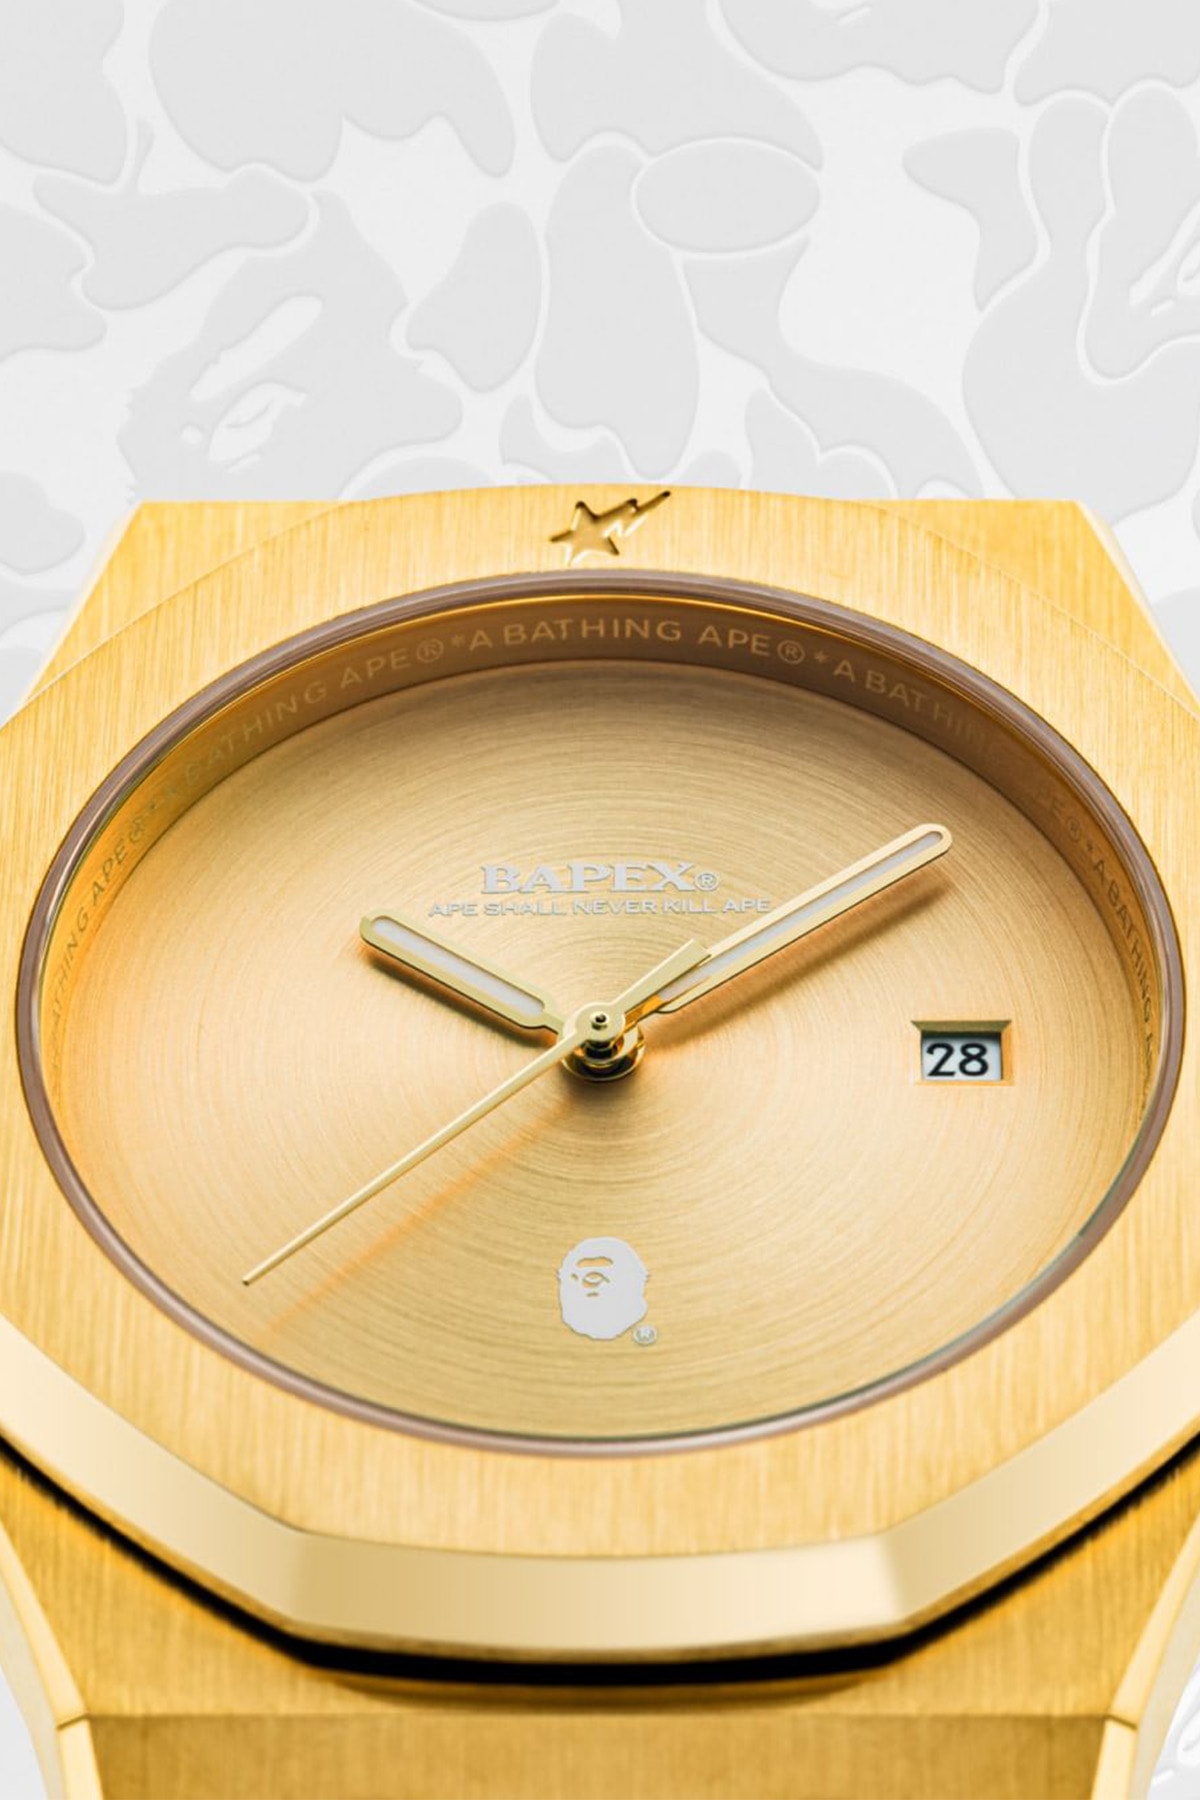 A BATHING APE®︎ 推出全新錶款型號 TYPE 9 BAPEX